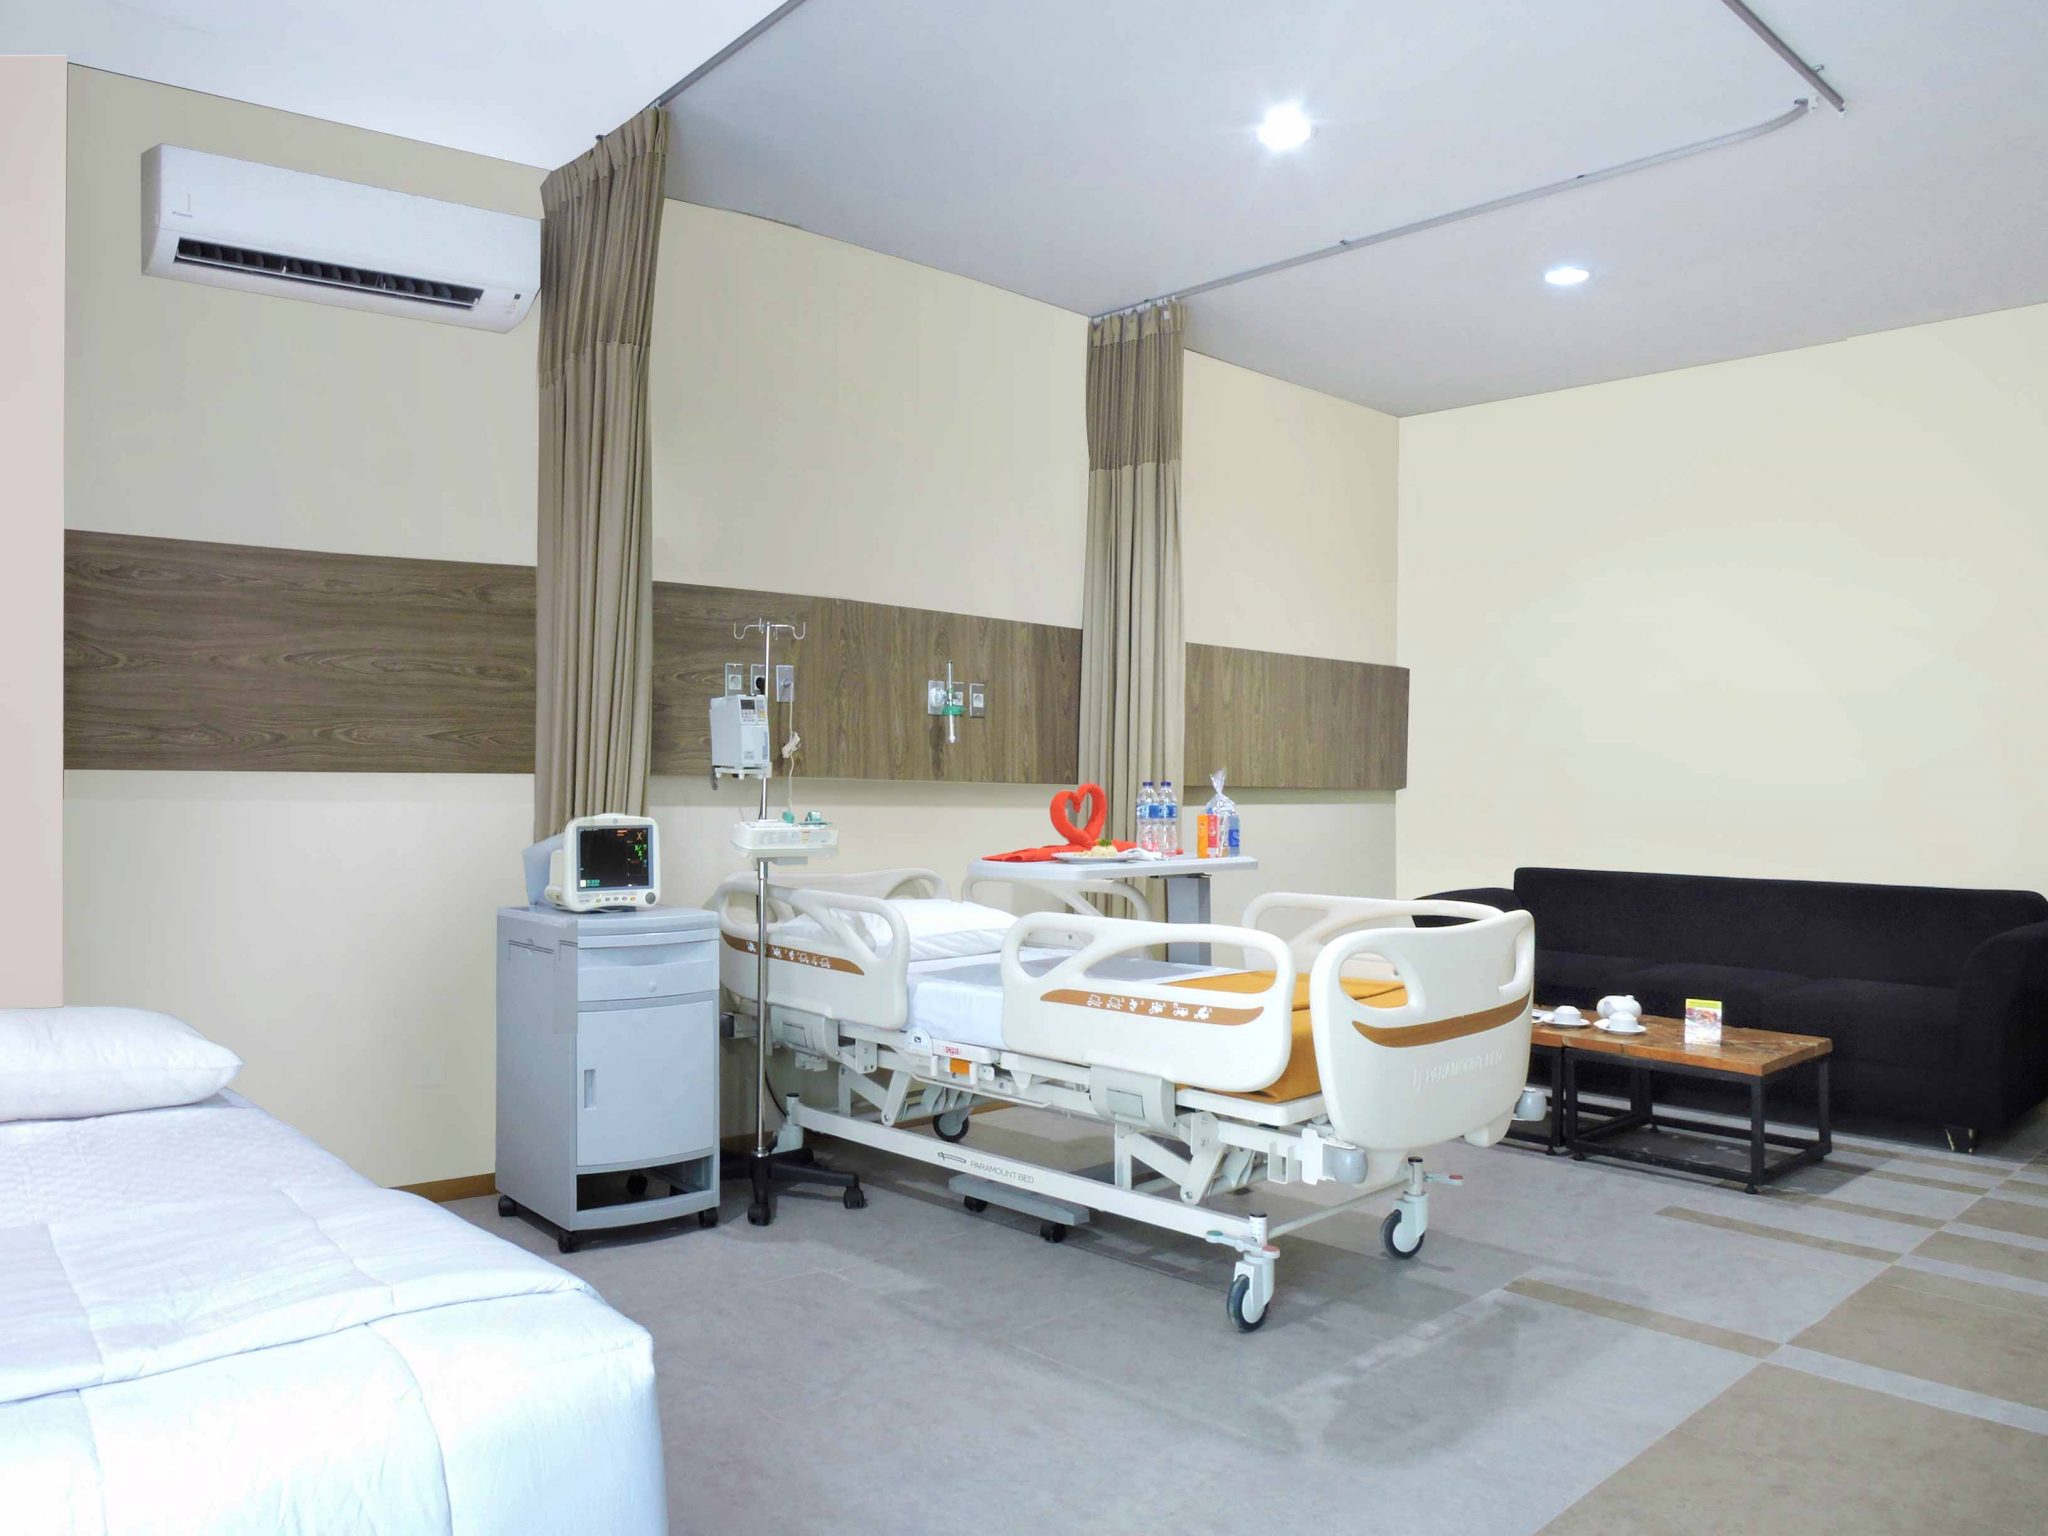 Hospital Rooms & Services Mandaya Hospital Group